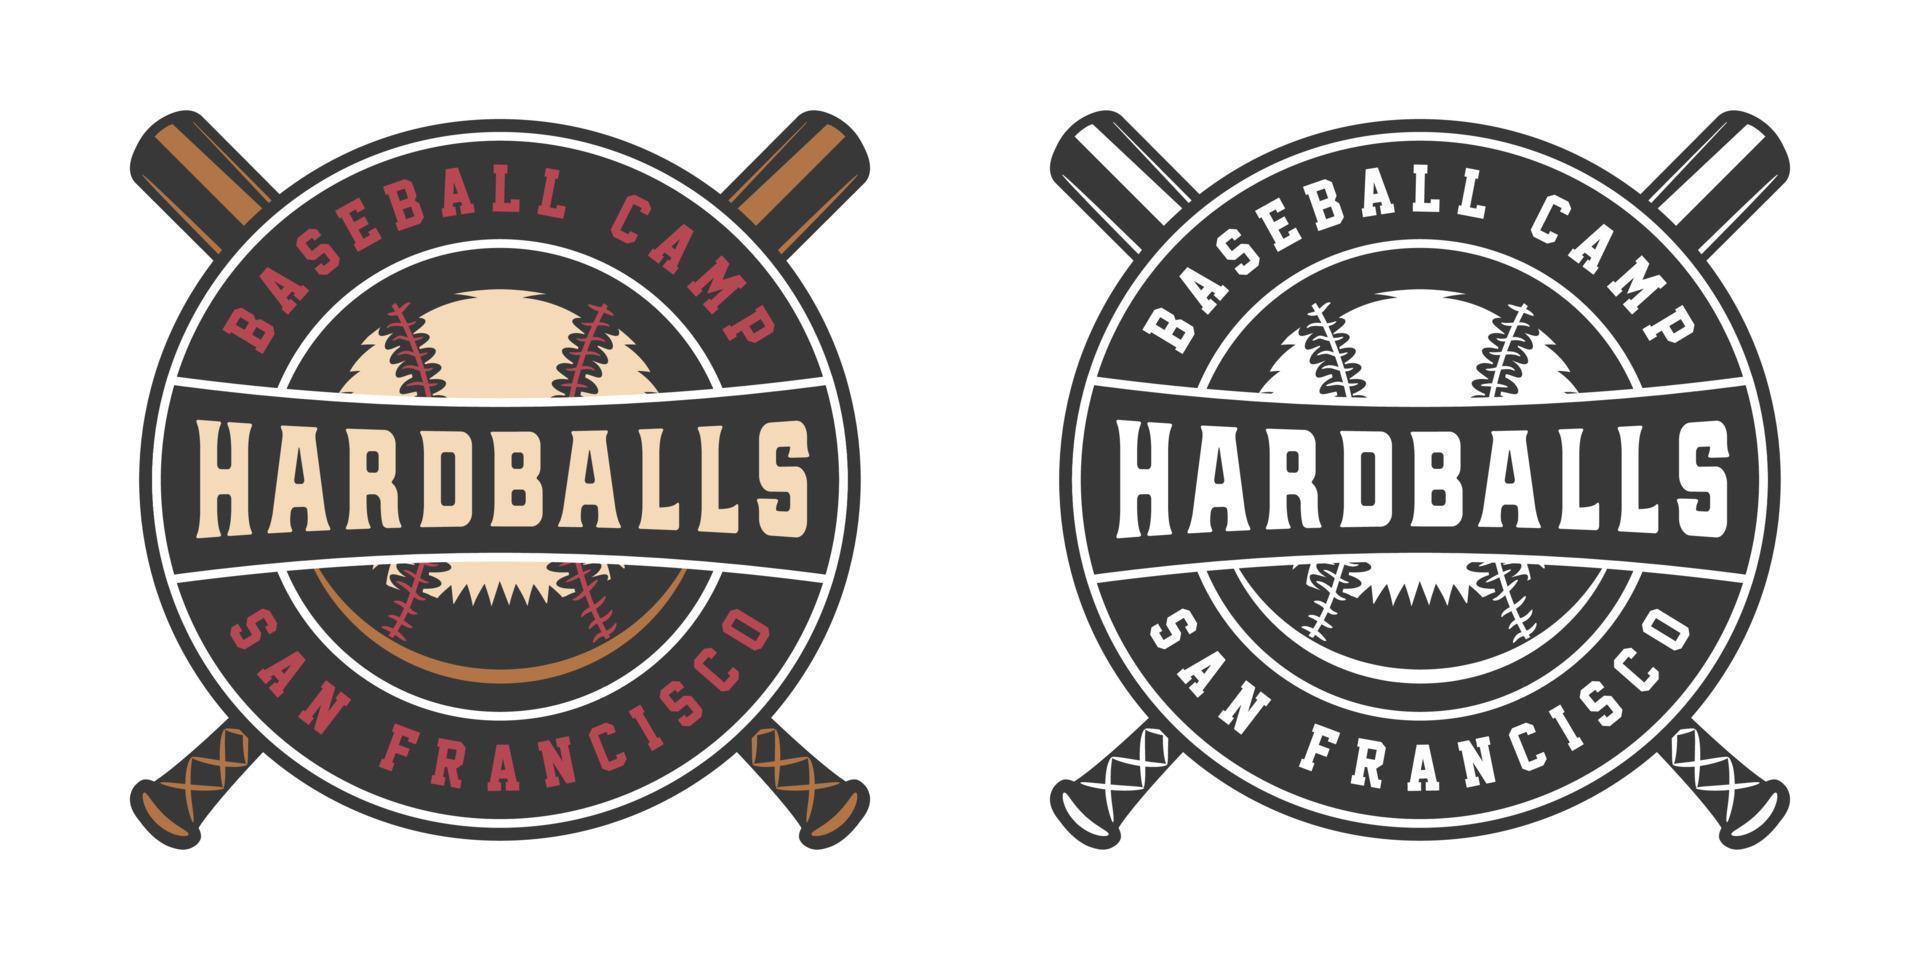 Clásico béisbol deporte logo, emblema, insignia, marca, etiqueta. gráfico Arte. vector